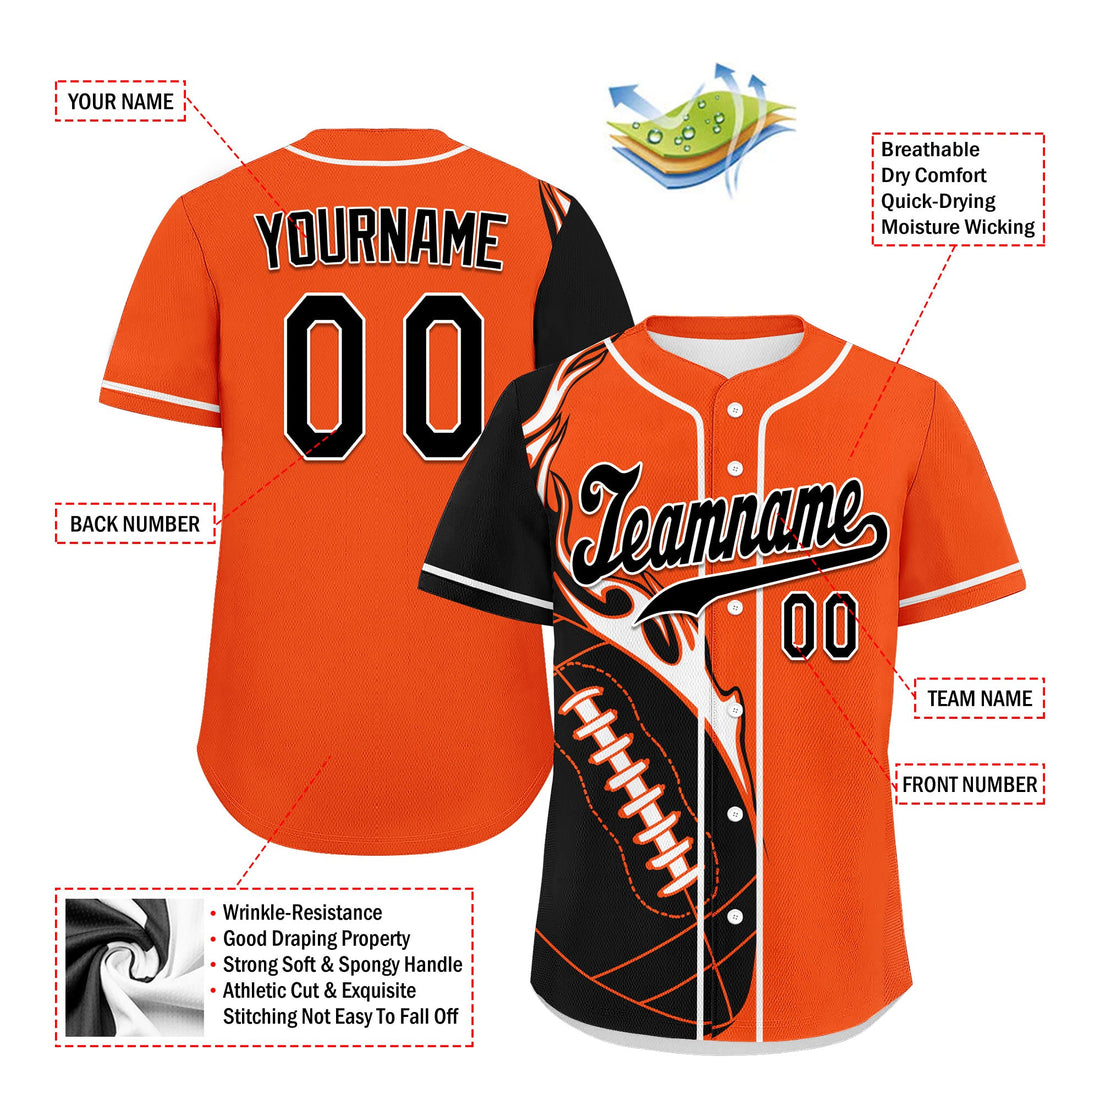 Custom Orange Black Classic Style Personalized Authentic Baseball Jersey UN002-D0b0a00-8